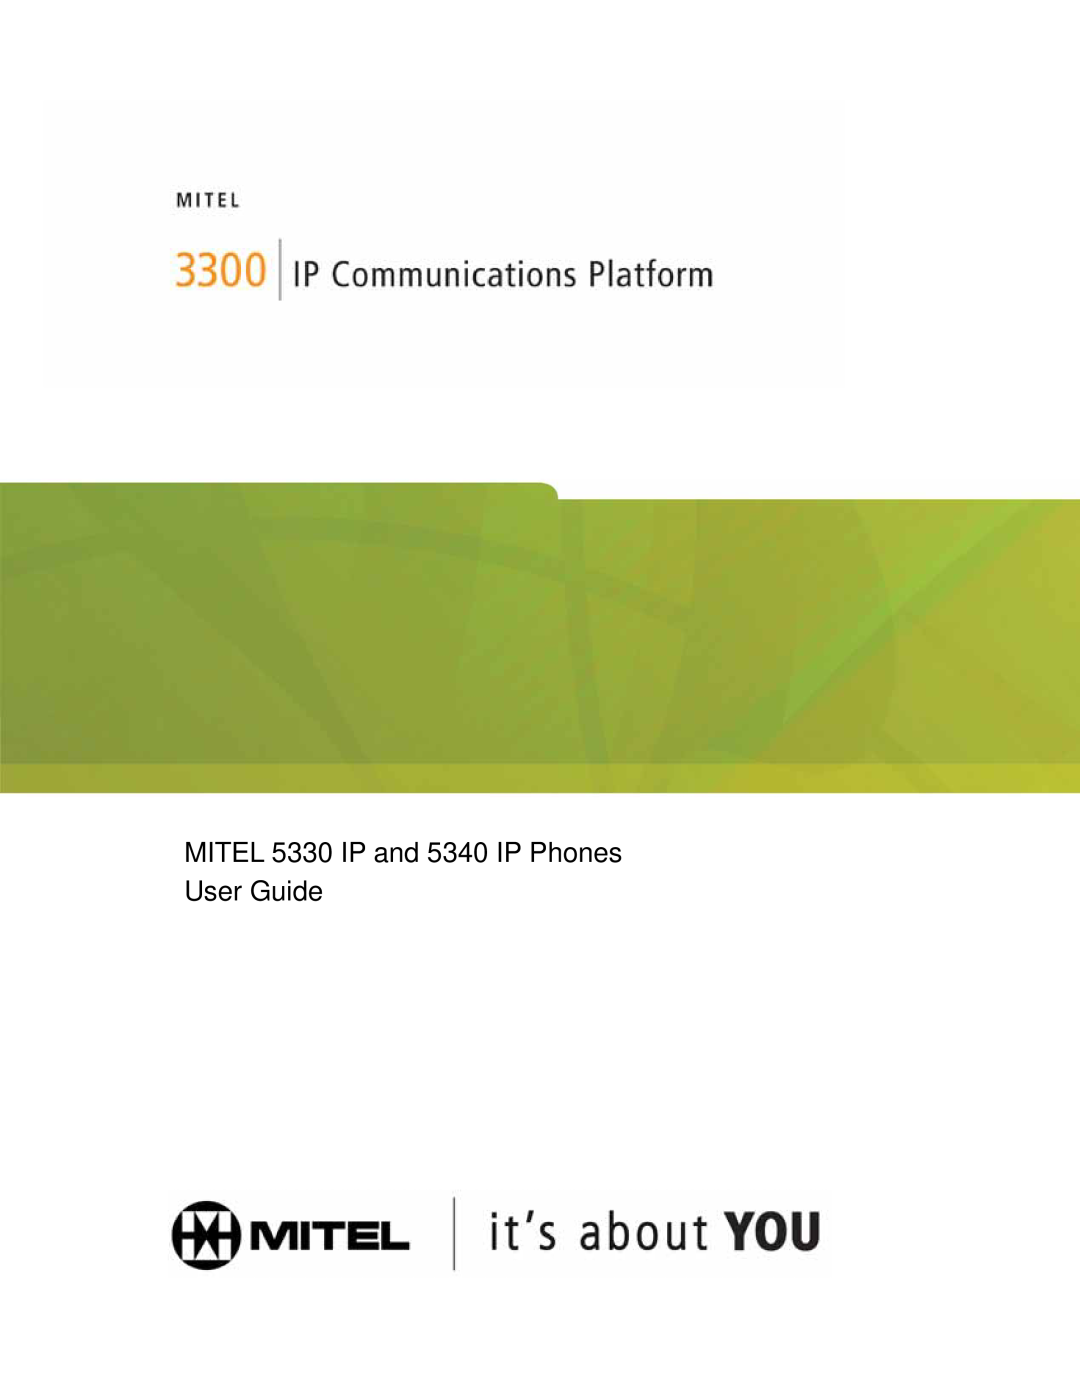 Mitel manual MITEL 5330 IP and 5340 IP Phones User Guide 